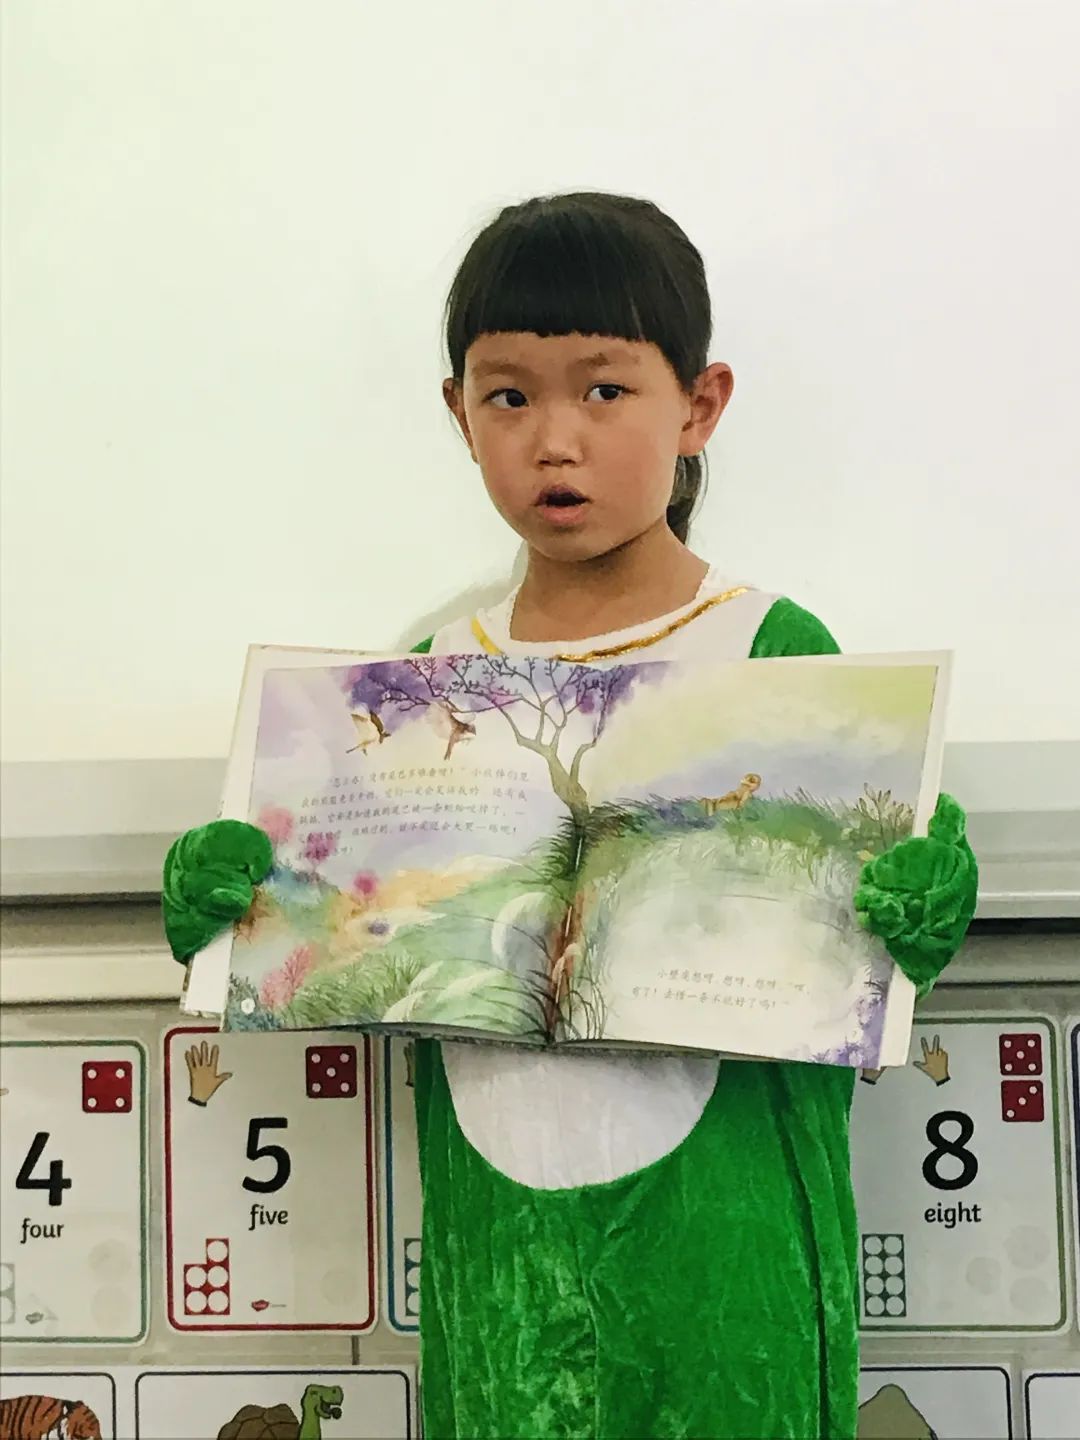 Yew Wah Book Character Day 在孩子心中种下一颗热爱阅读的种子